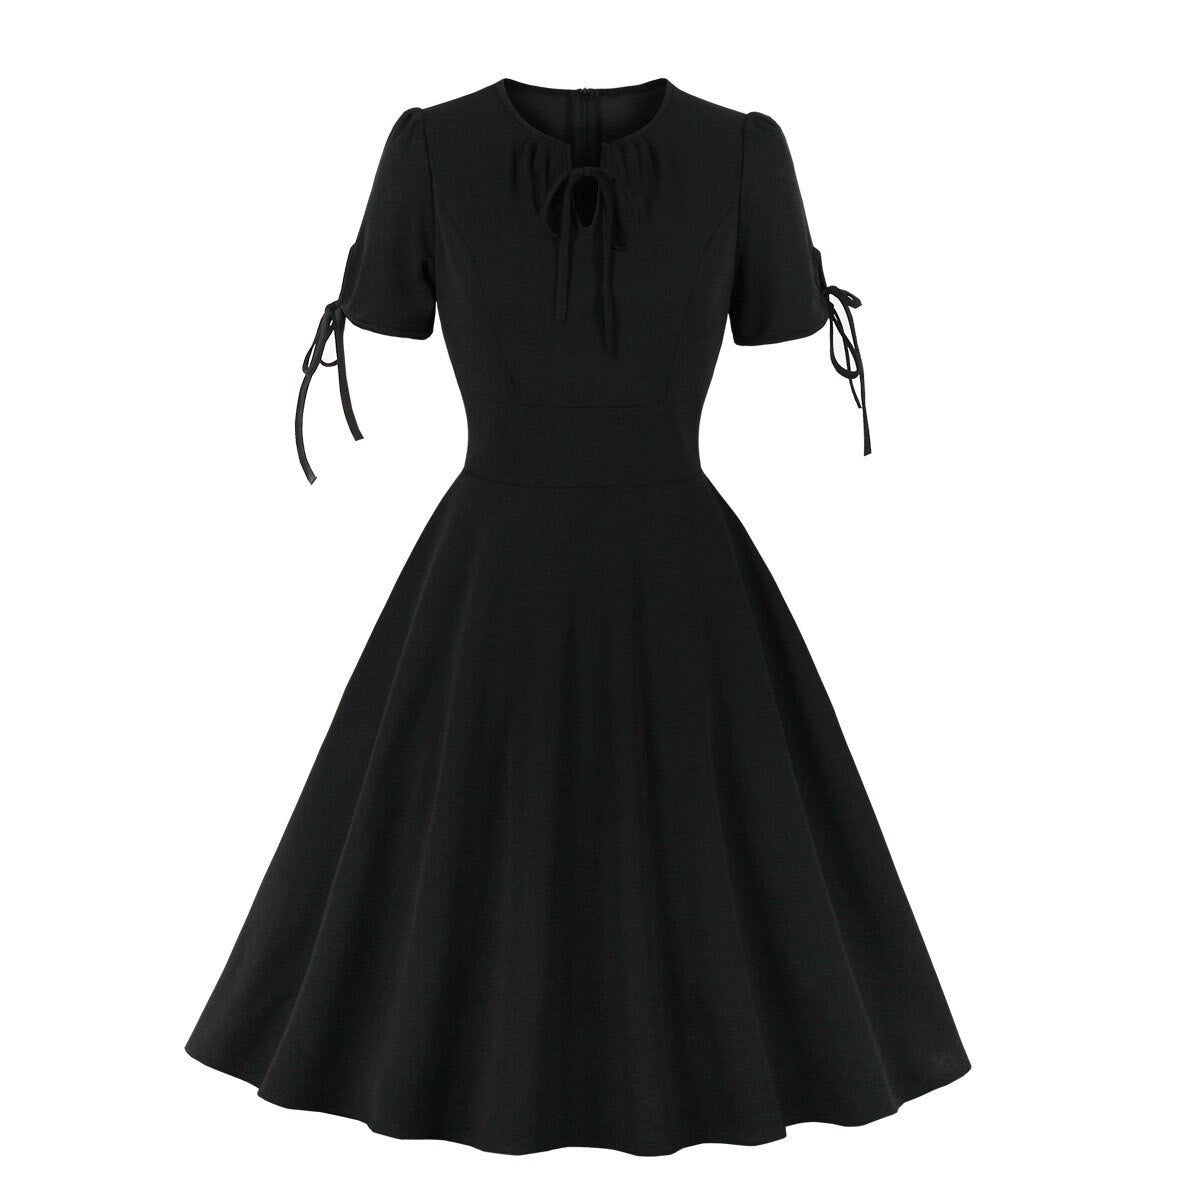 2021 Solid Color Black Women Party Swing Midi Tunic Dress V Neck Cotton Retro Vintage 40s 50s 60s 70s Casual Rockabilly Sundress